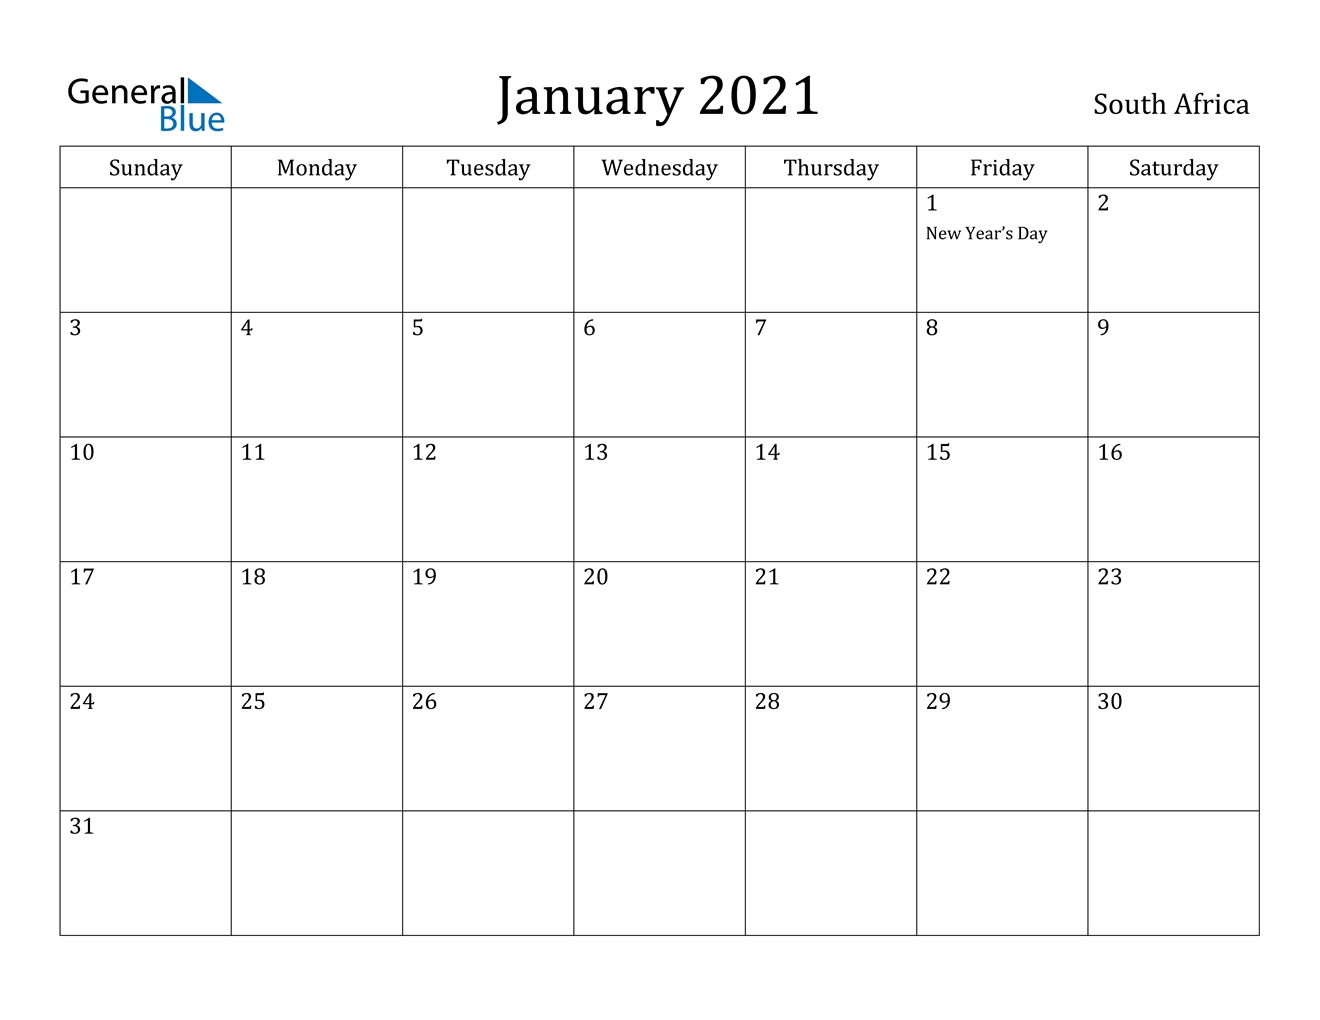 January 2021 Calendar - South Africa-Design Free South African Daily Calendar 2021